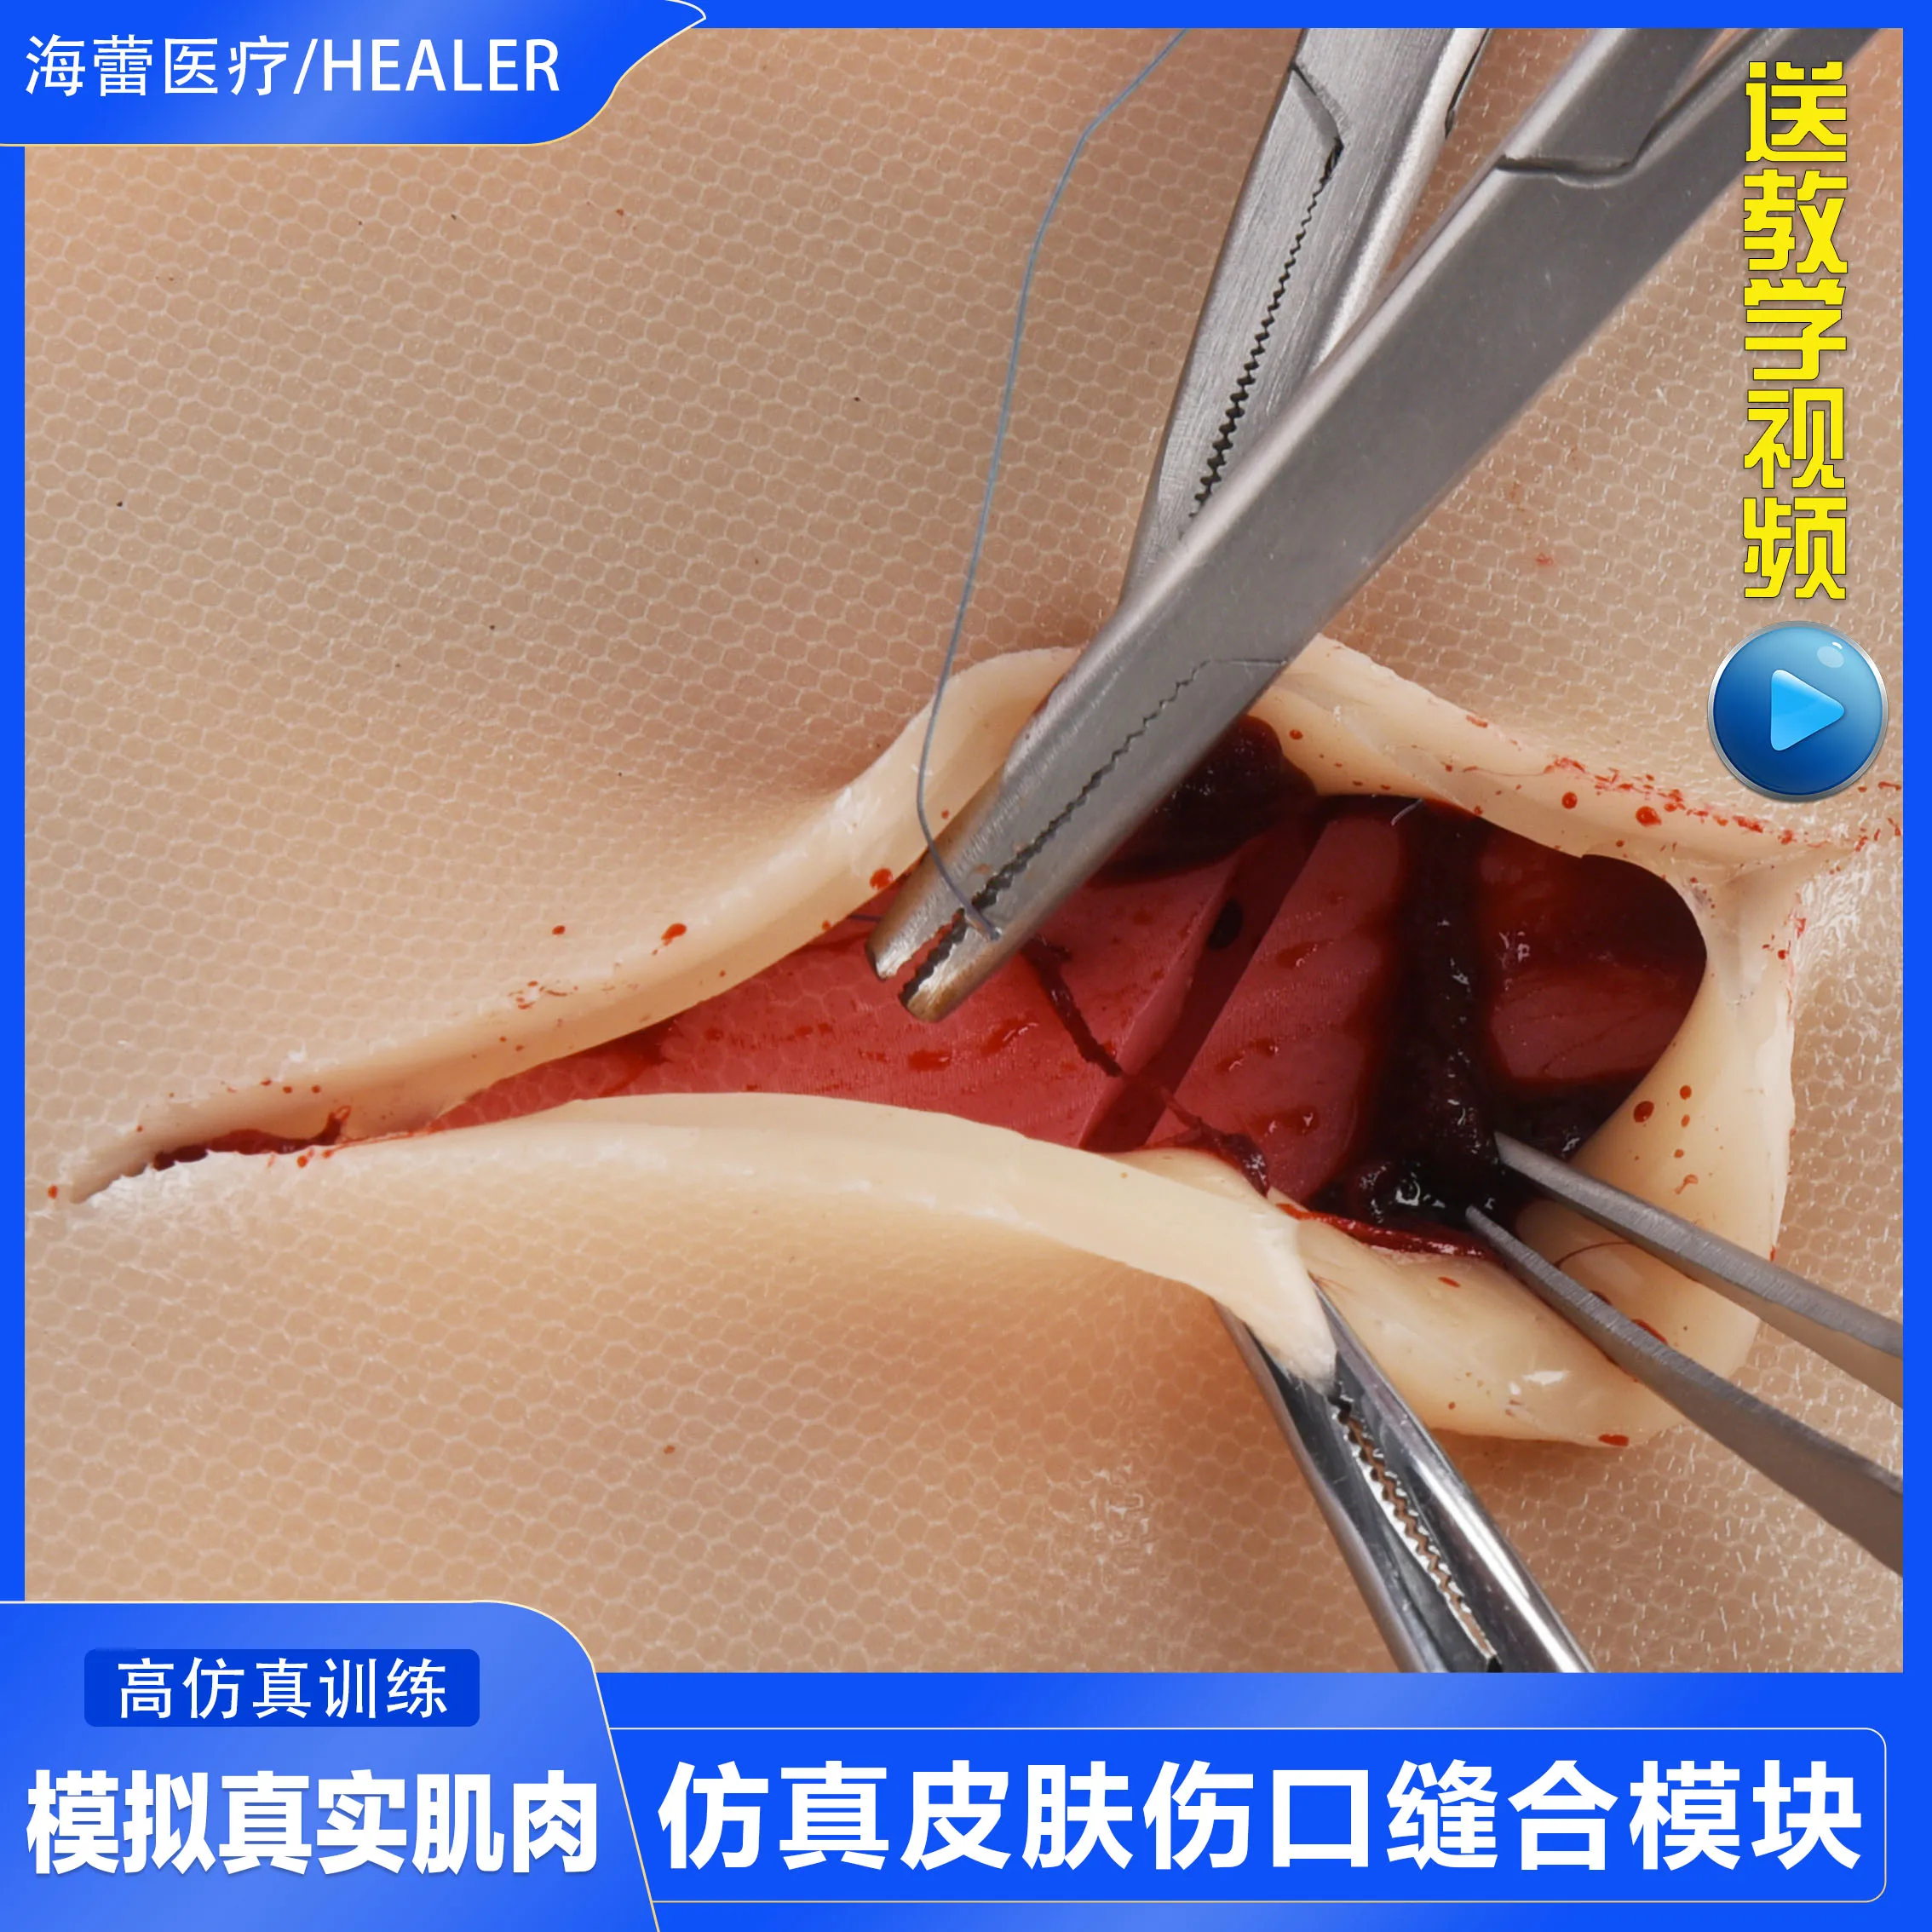 

student suture practice skin model simulation skin multiple wound suture module simulation surgical wound debridement suture